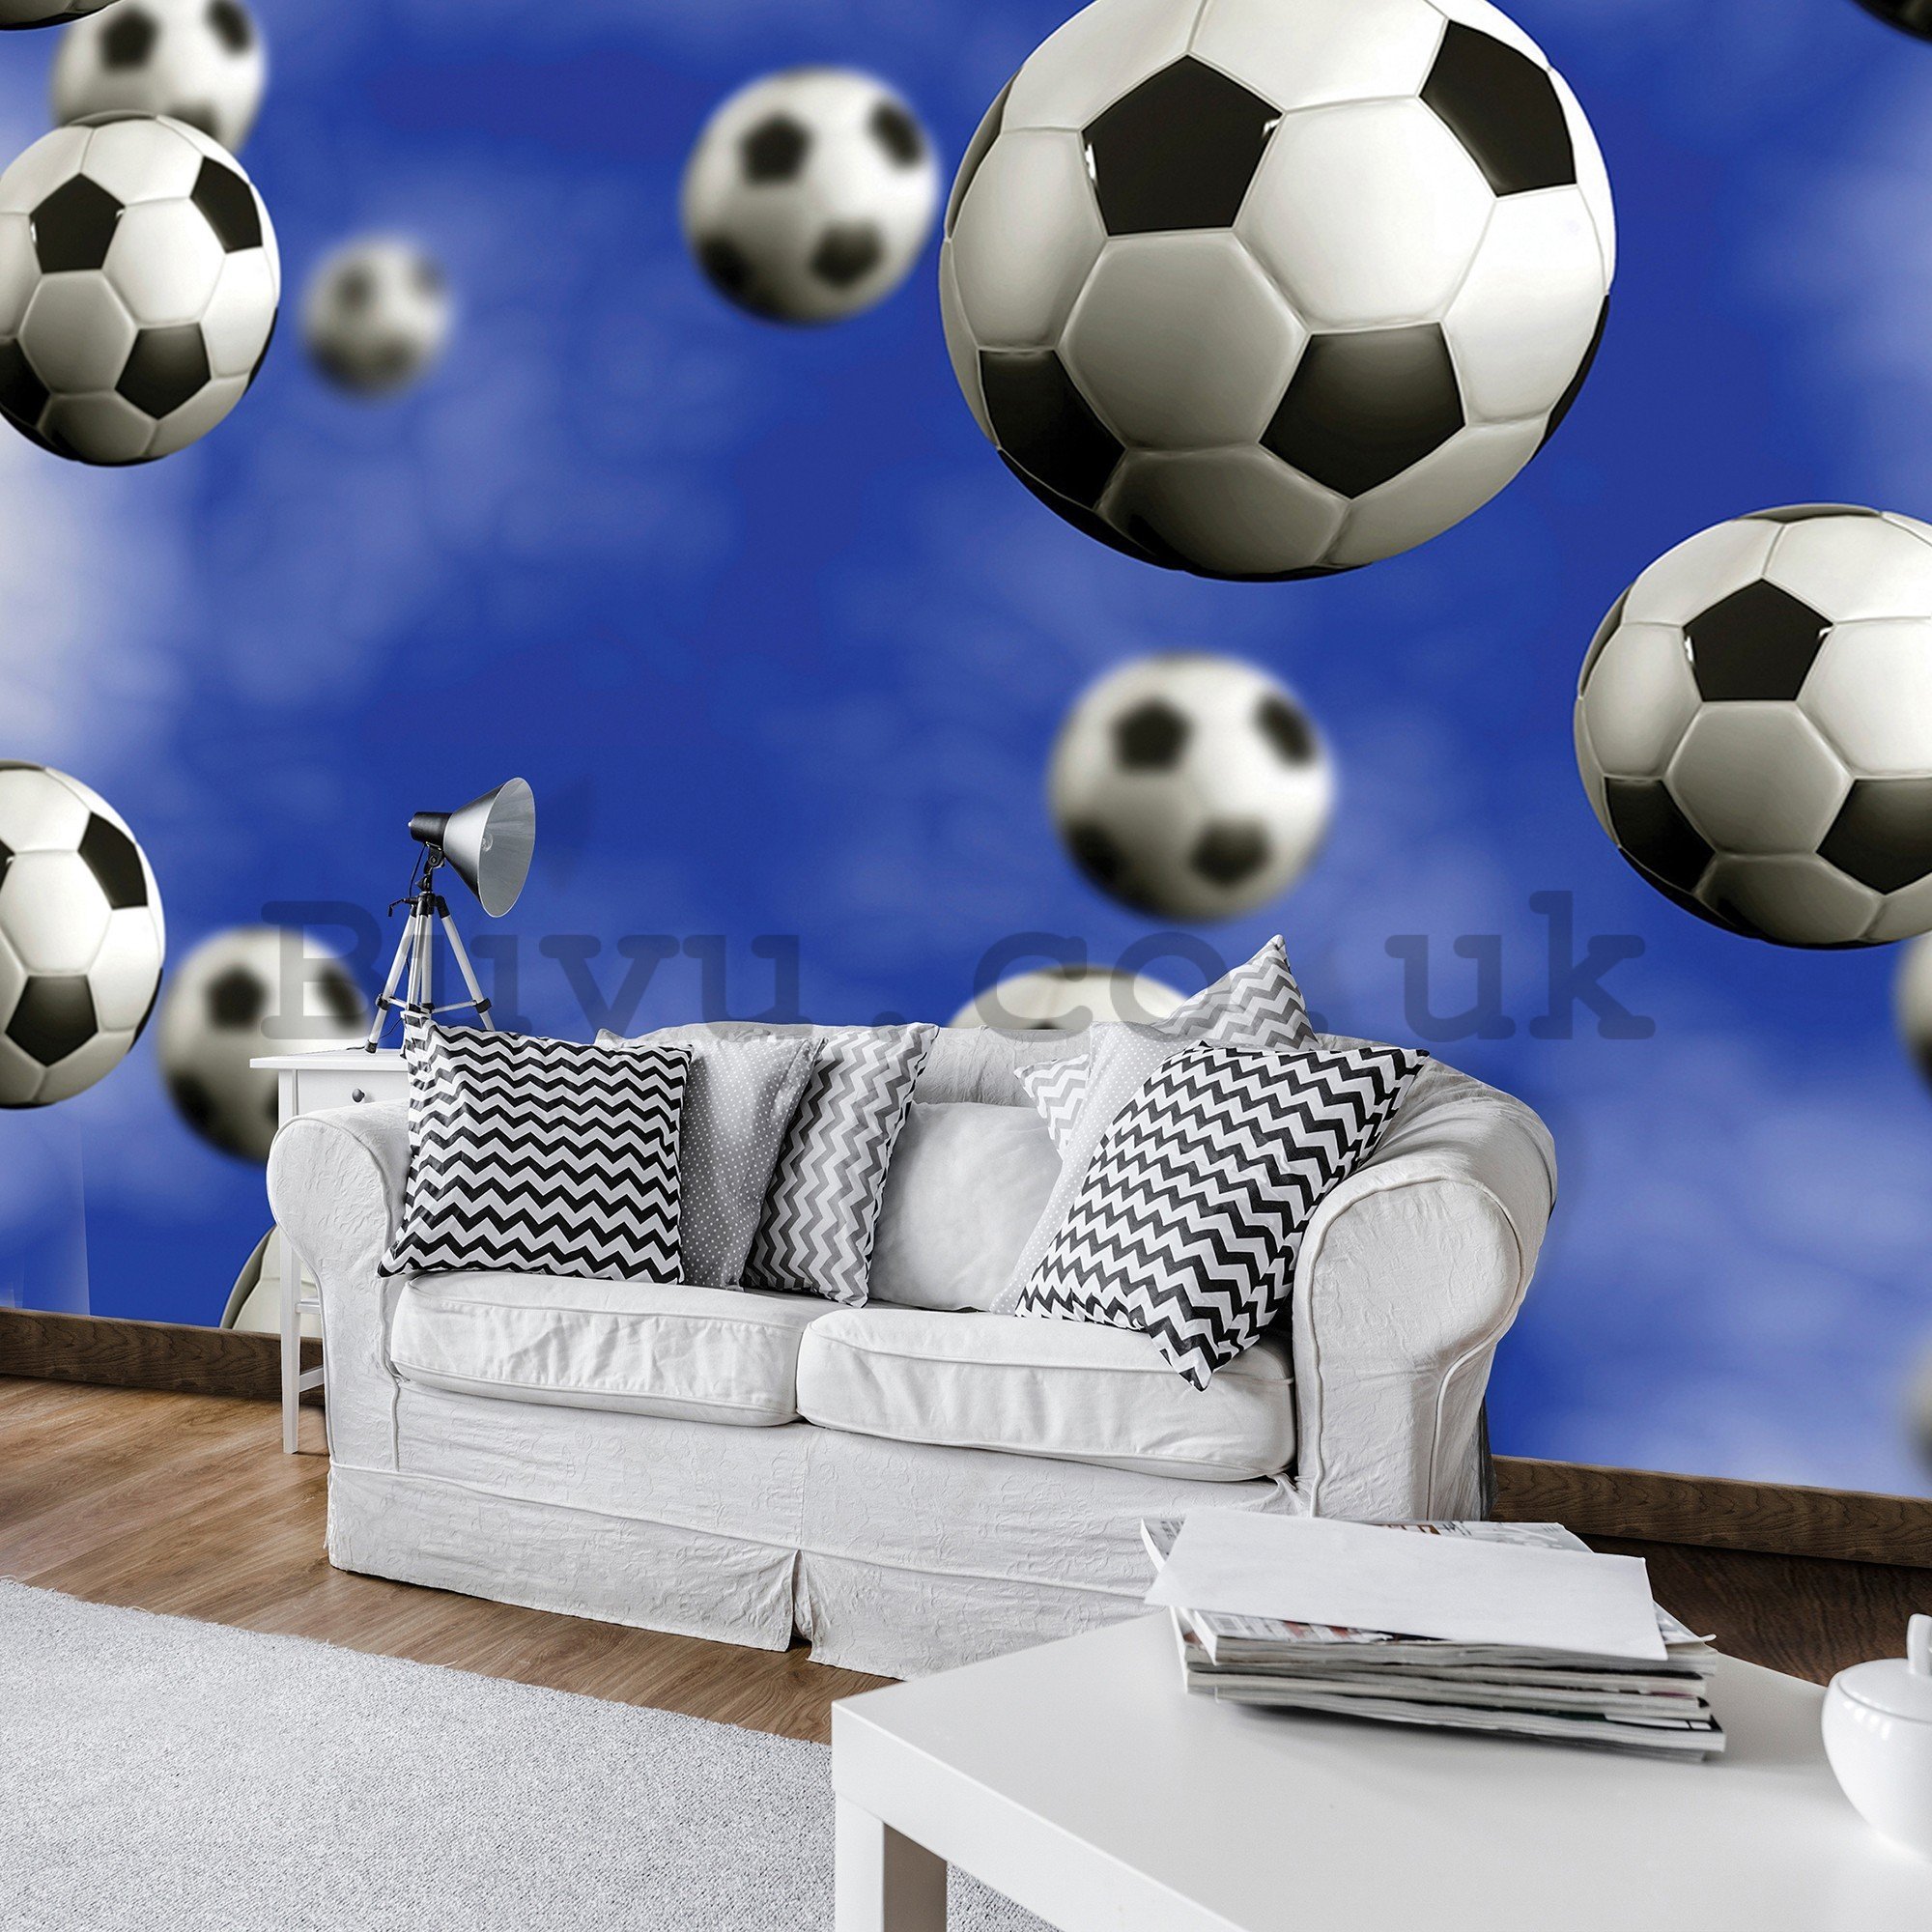 Wall mural vlies: Football balls - 416x254 cm